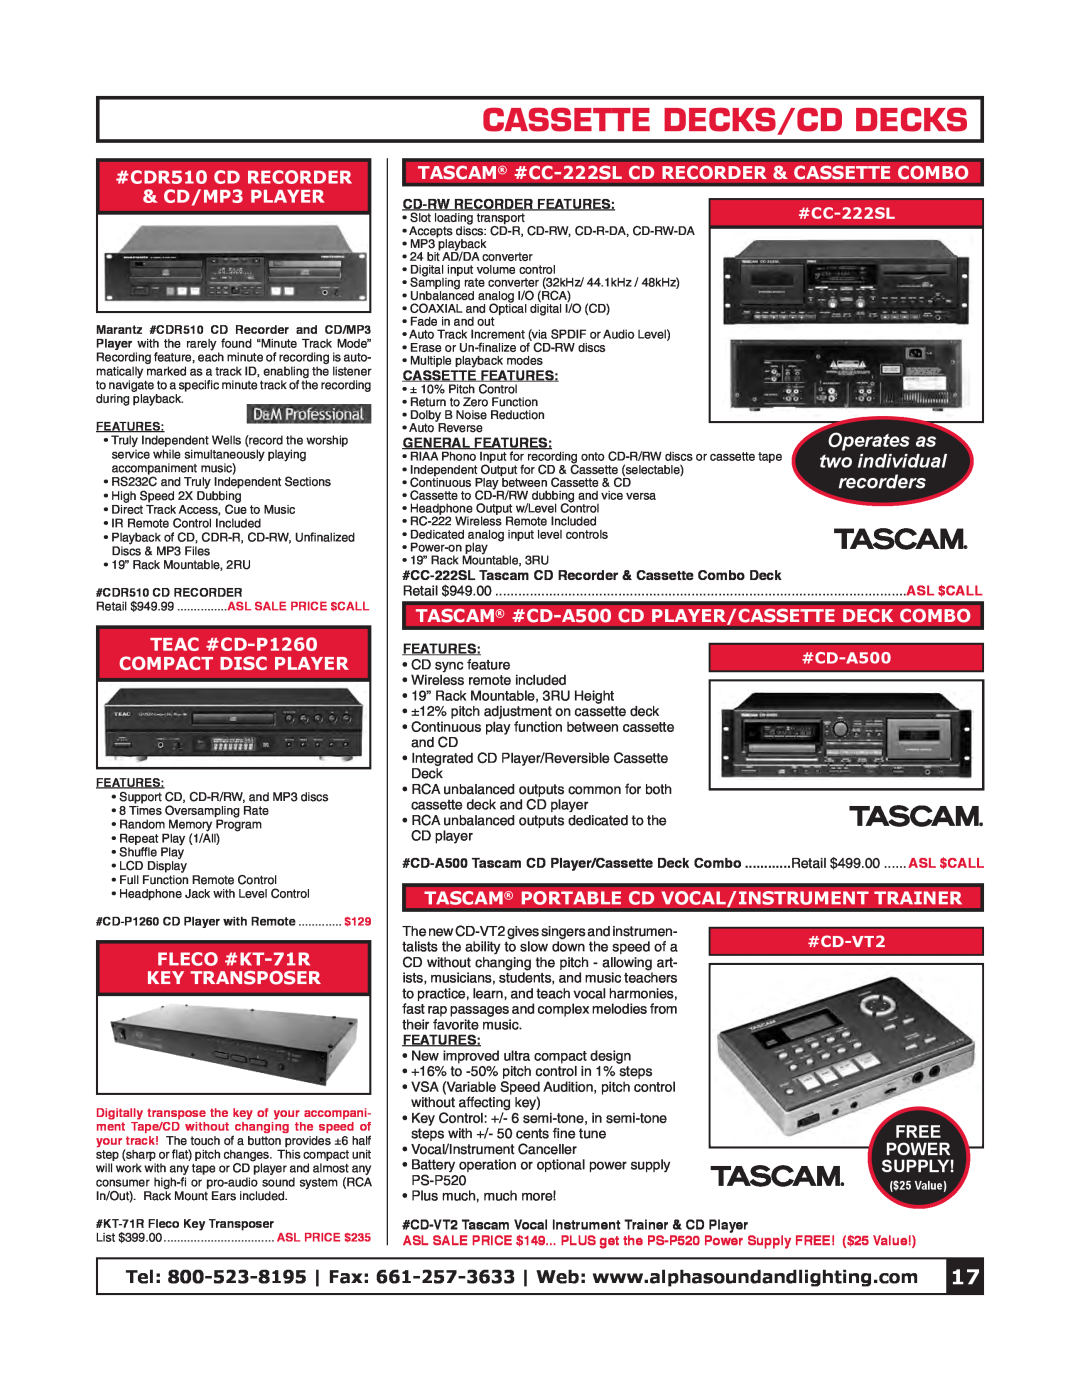 Tascam CD-VT2 manual Cassette Decks/Cd Decks, #CDR510 CD RECORDER CD/MP3 PLAYER, TEAC #CD-P1260 COMPACT DISC PLAYER 